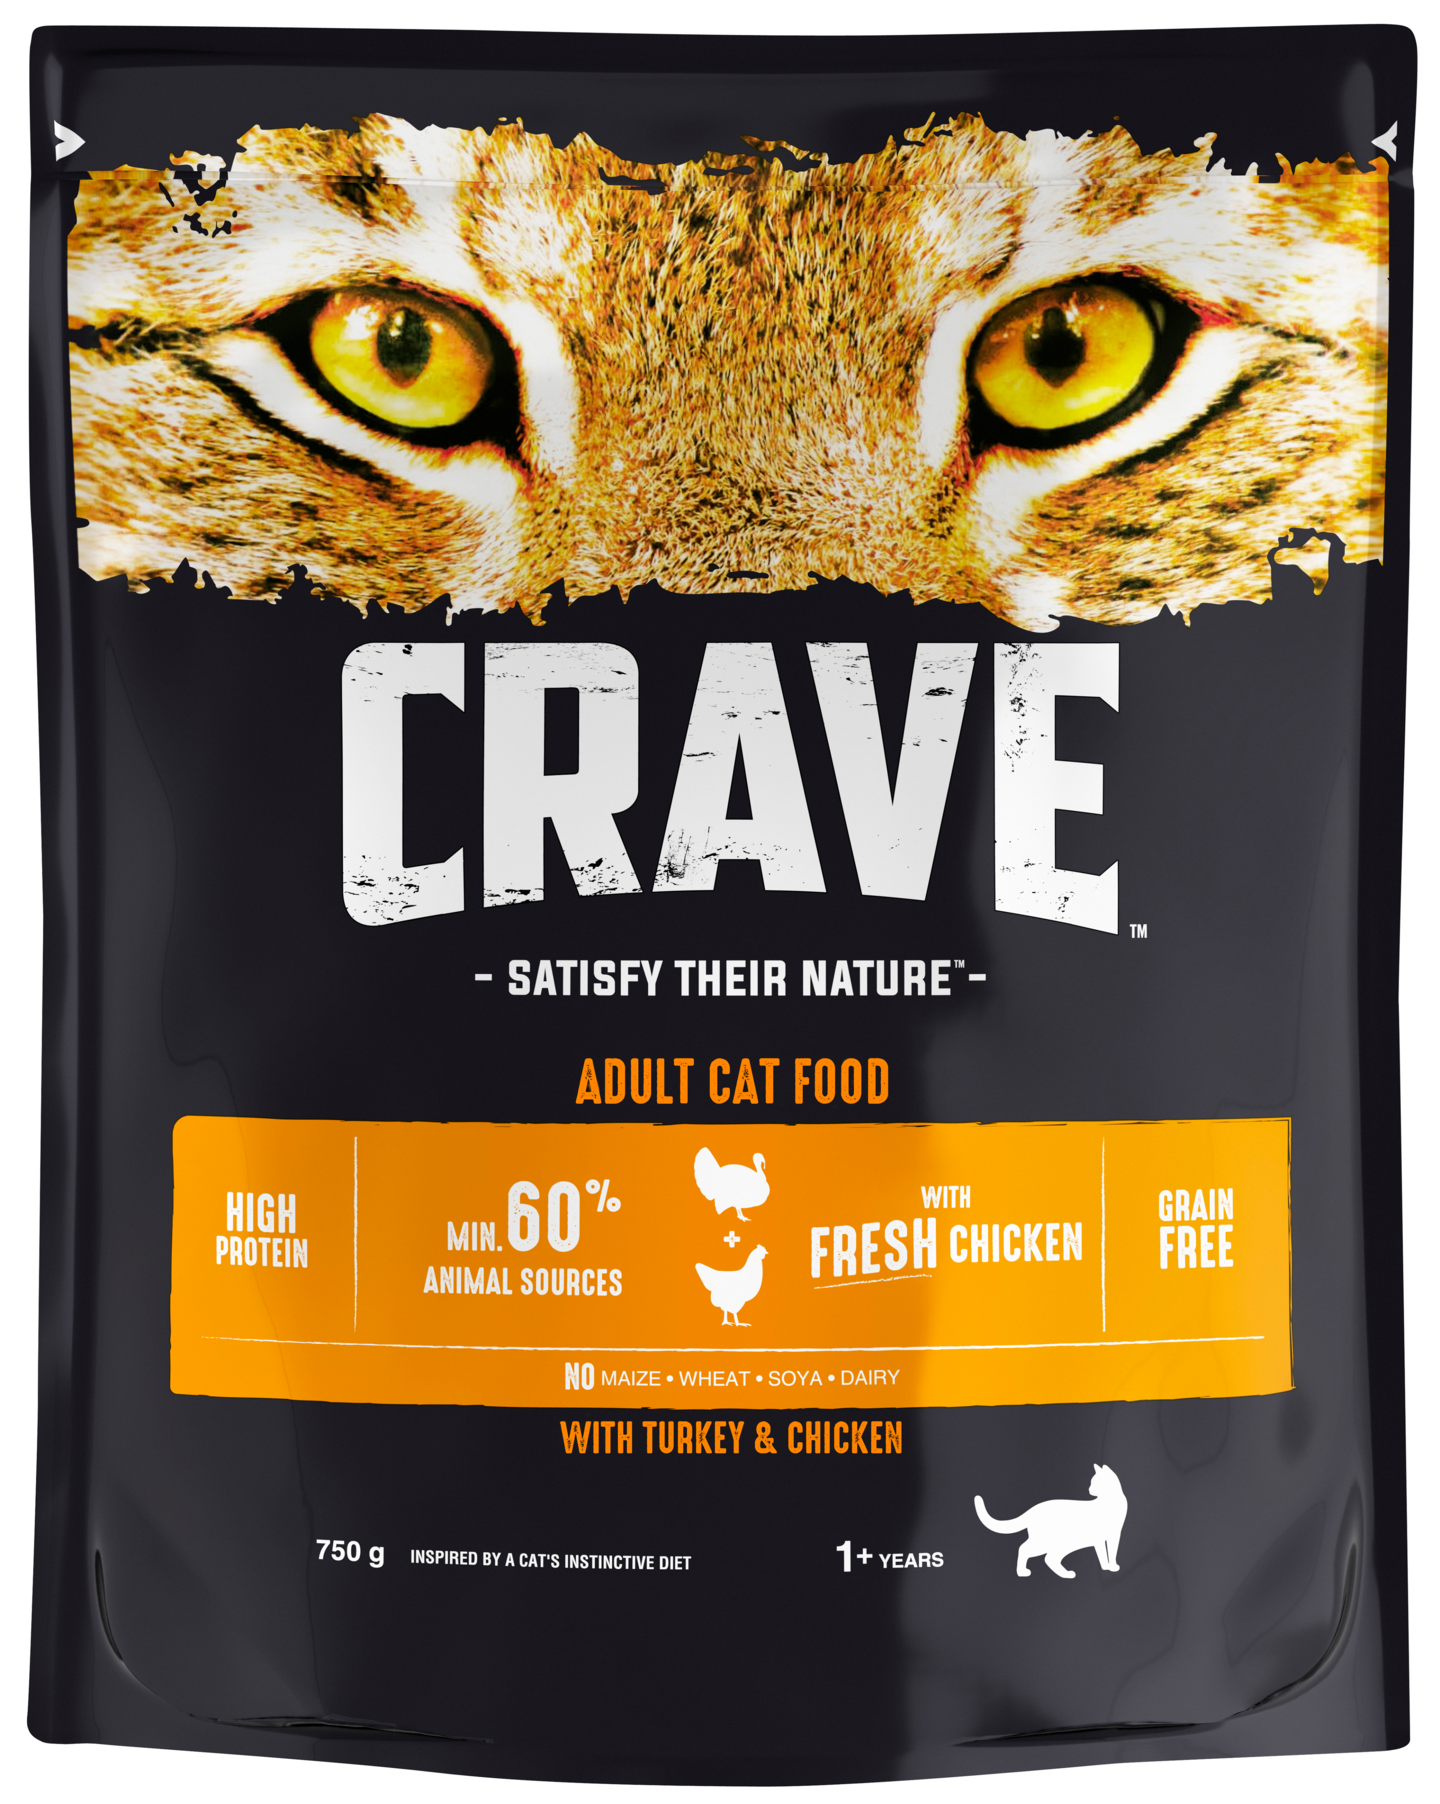 Crave kissanruoka 750g kalkkuna kana